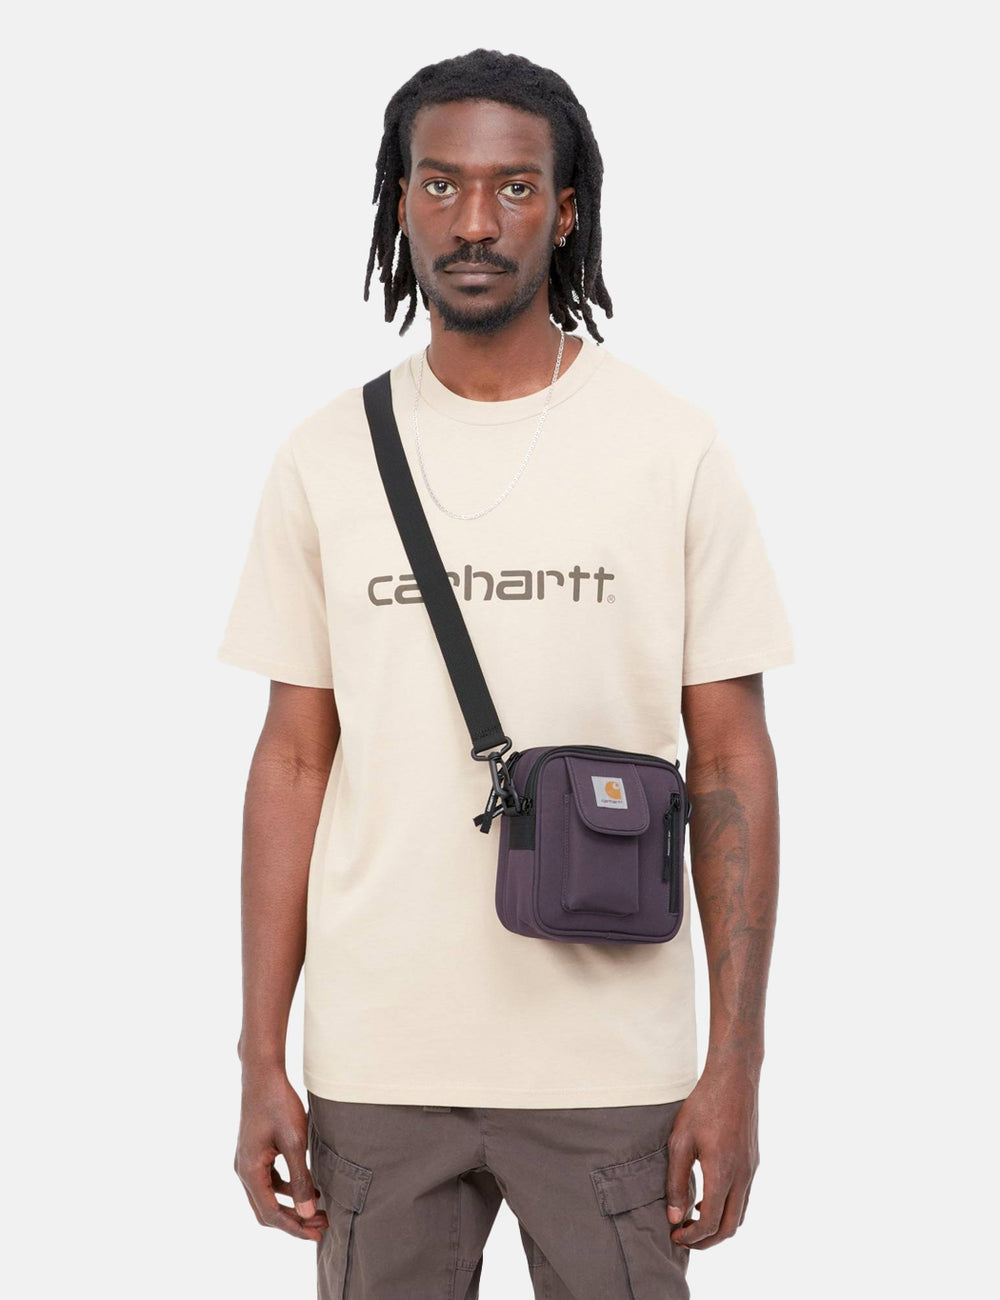 Carhartt-WIP Essentials Bag (Small) - Artichoke Purple I Urban